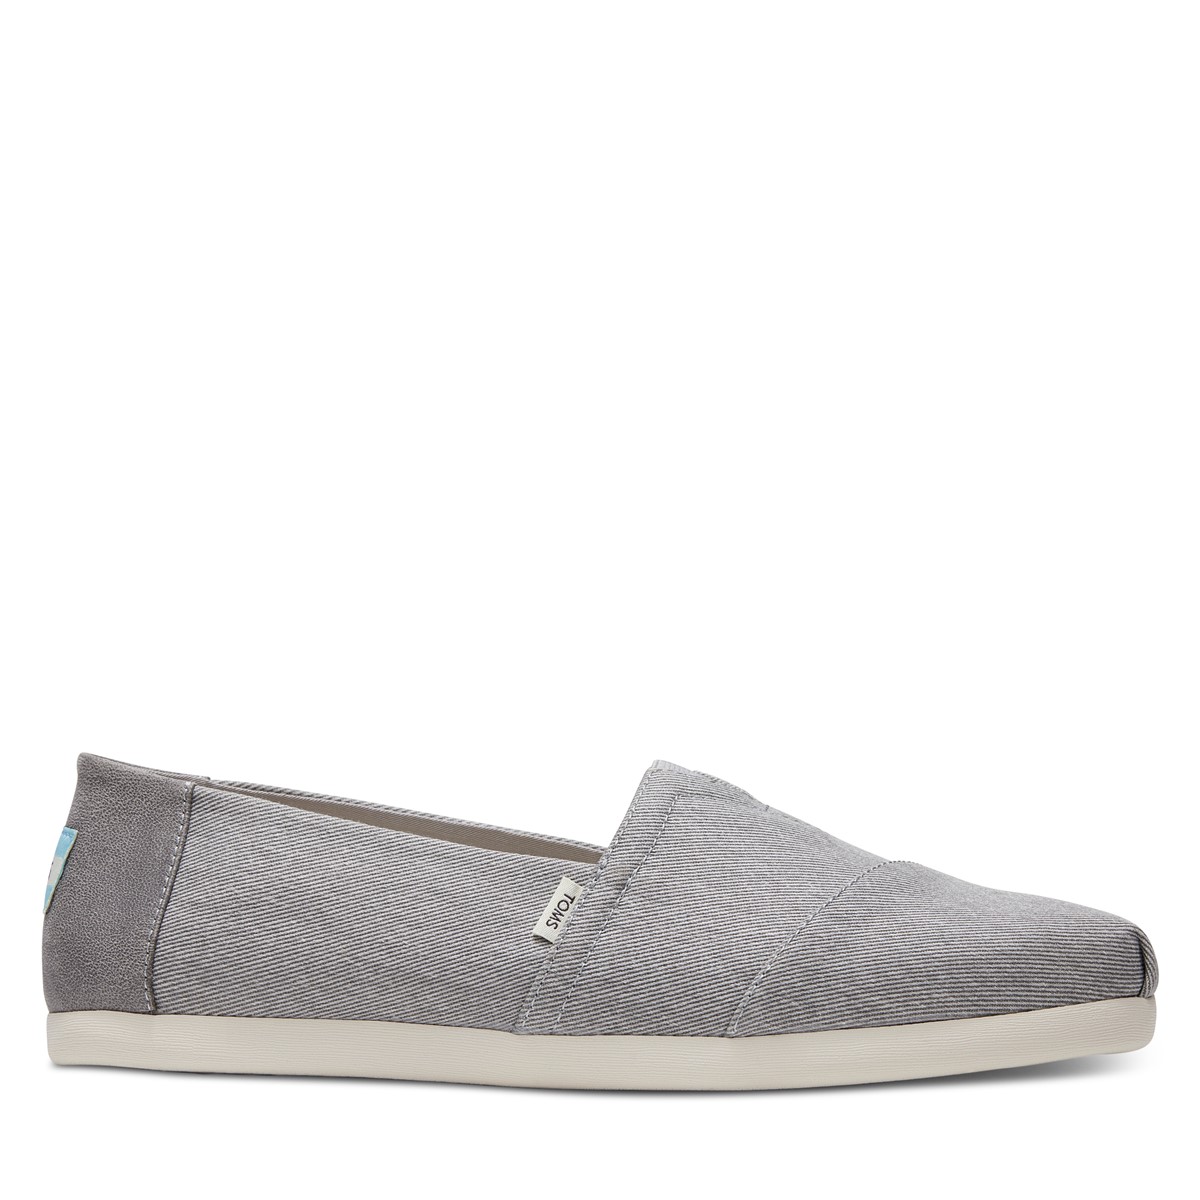 Men's Alpargata Waterless Slip-On Shoes in Grey